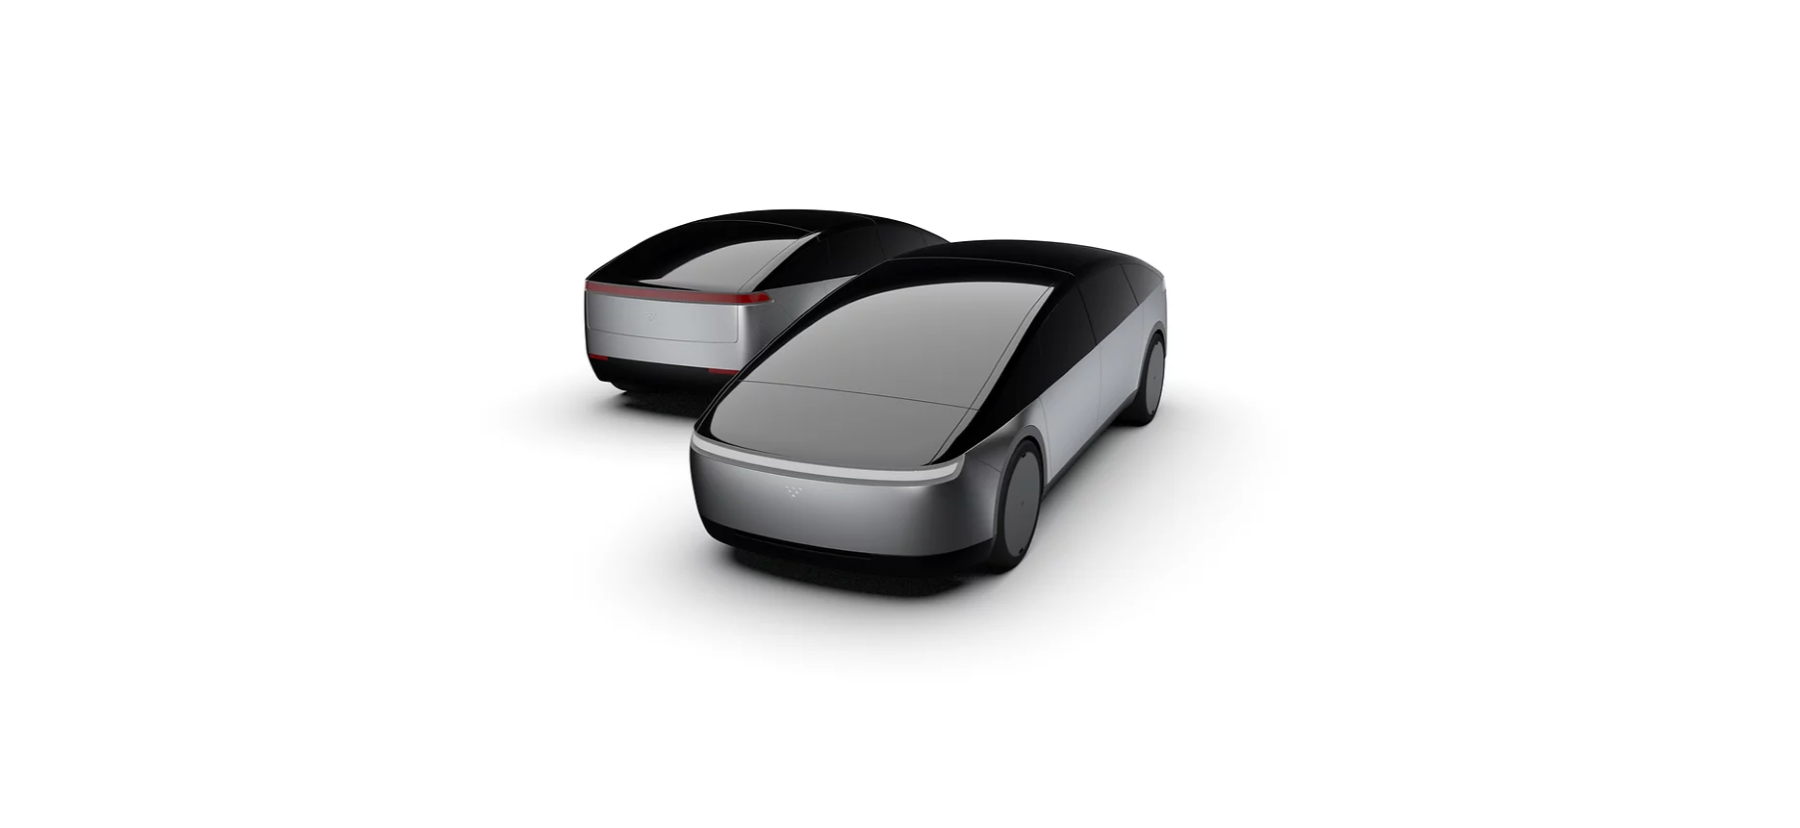 The Fresco XL all-electric long-range vehicle design concept from Fresco Motors